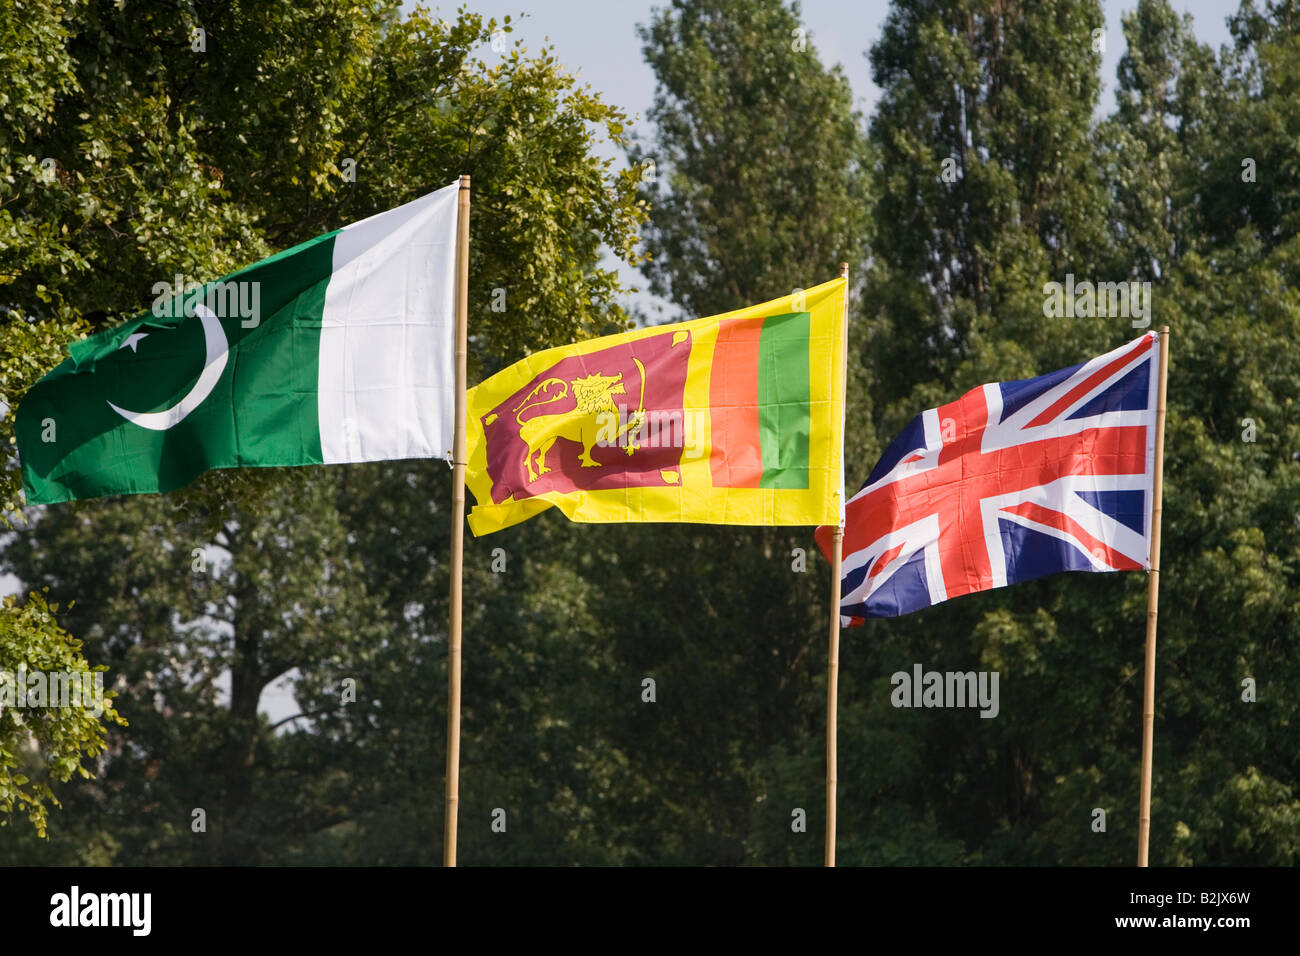 UK England Manchester Platt Fields Mega Mela Pakistani Sri Lankan and British flags flying together Stock Photo